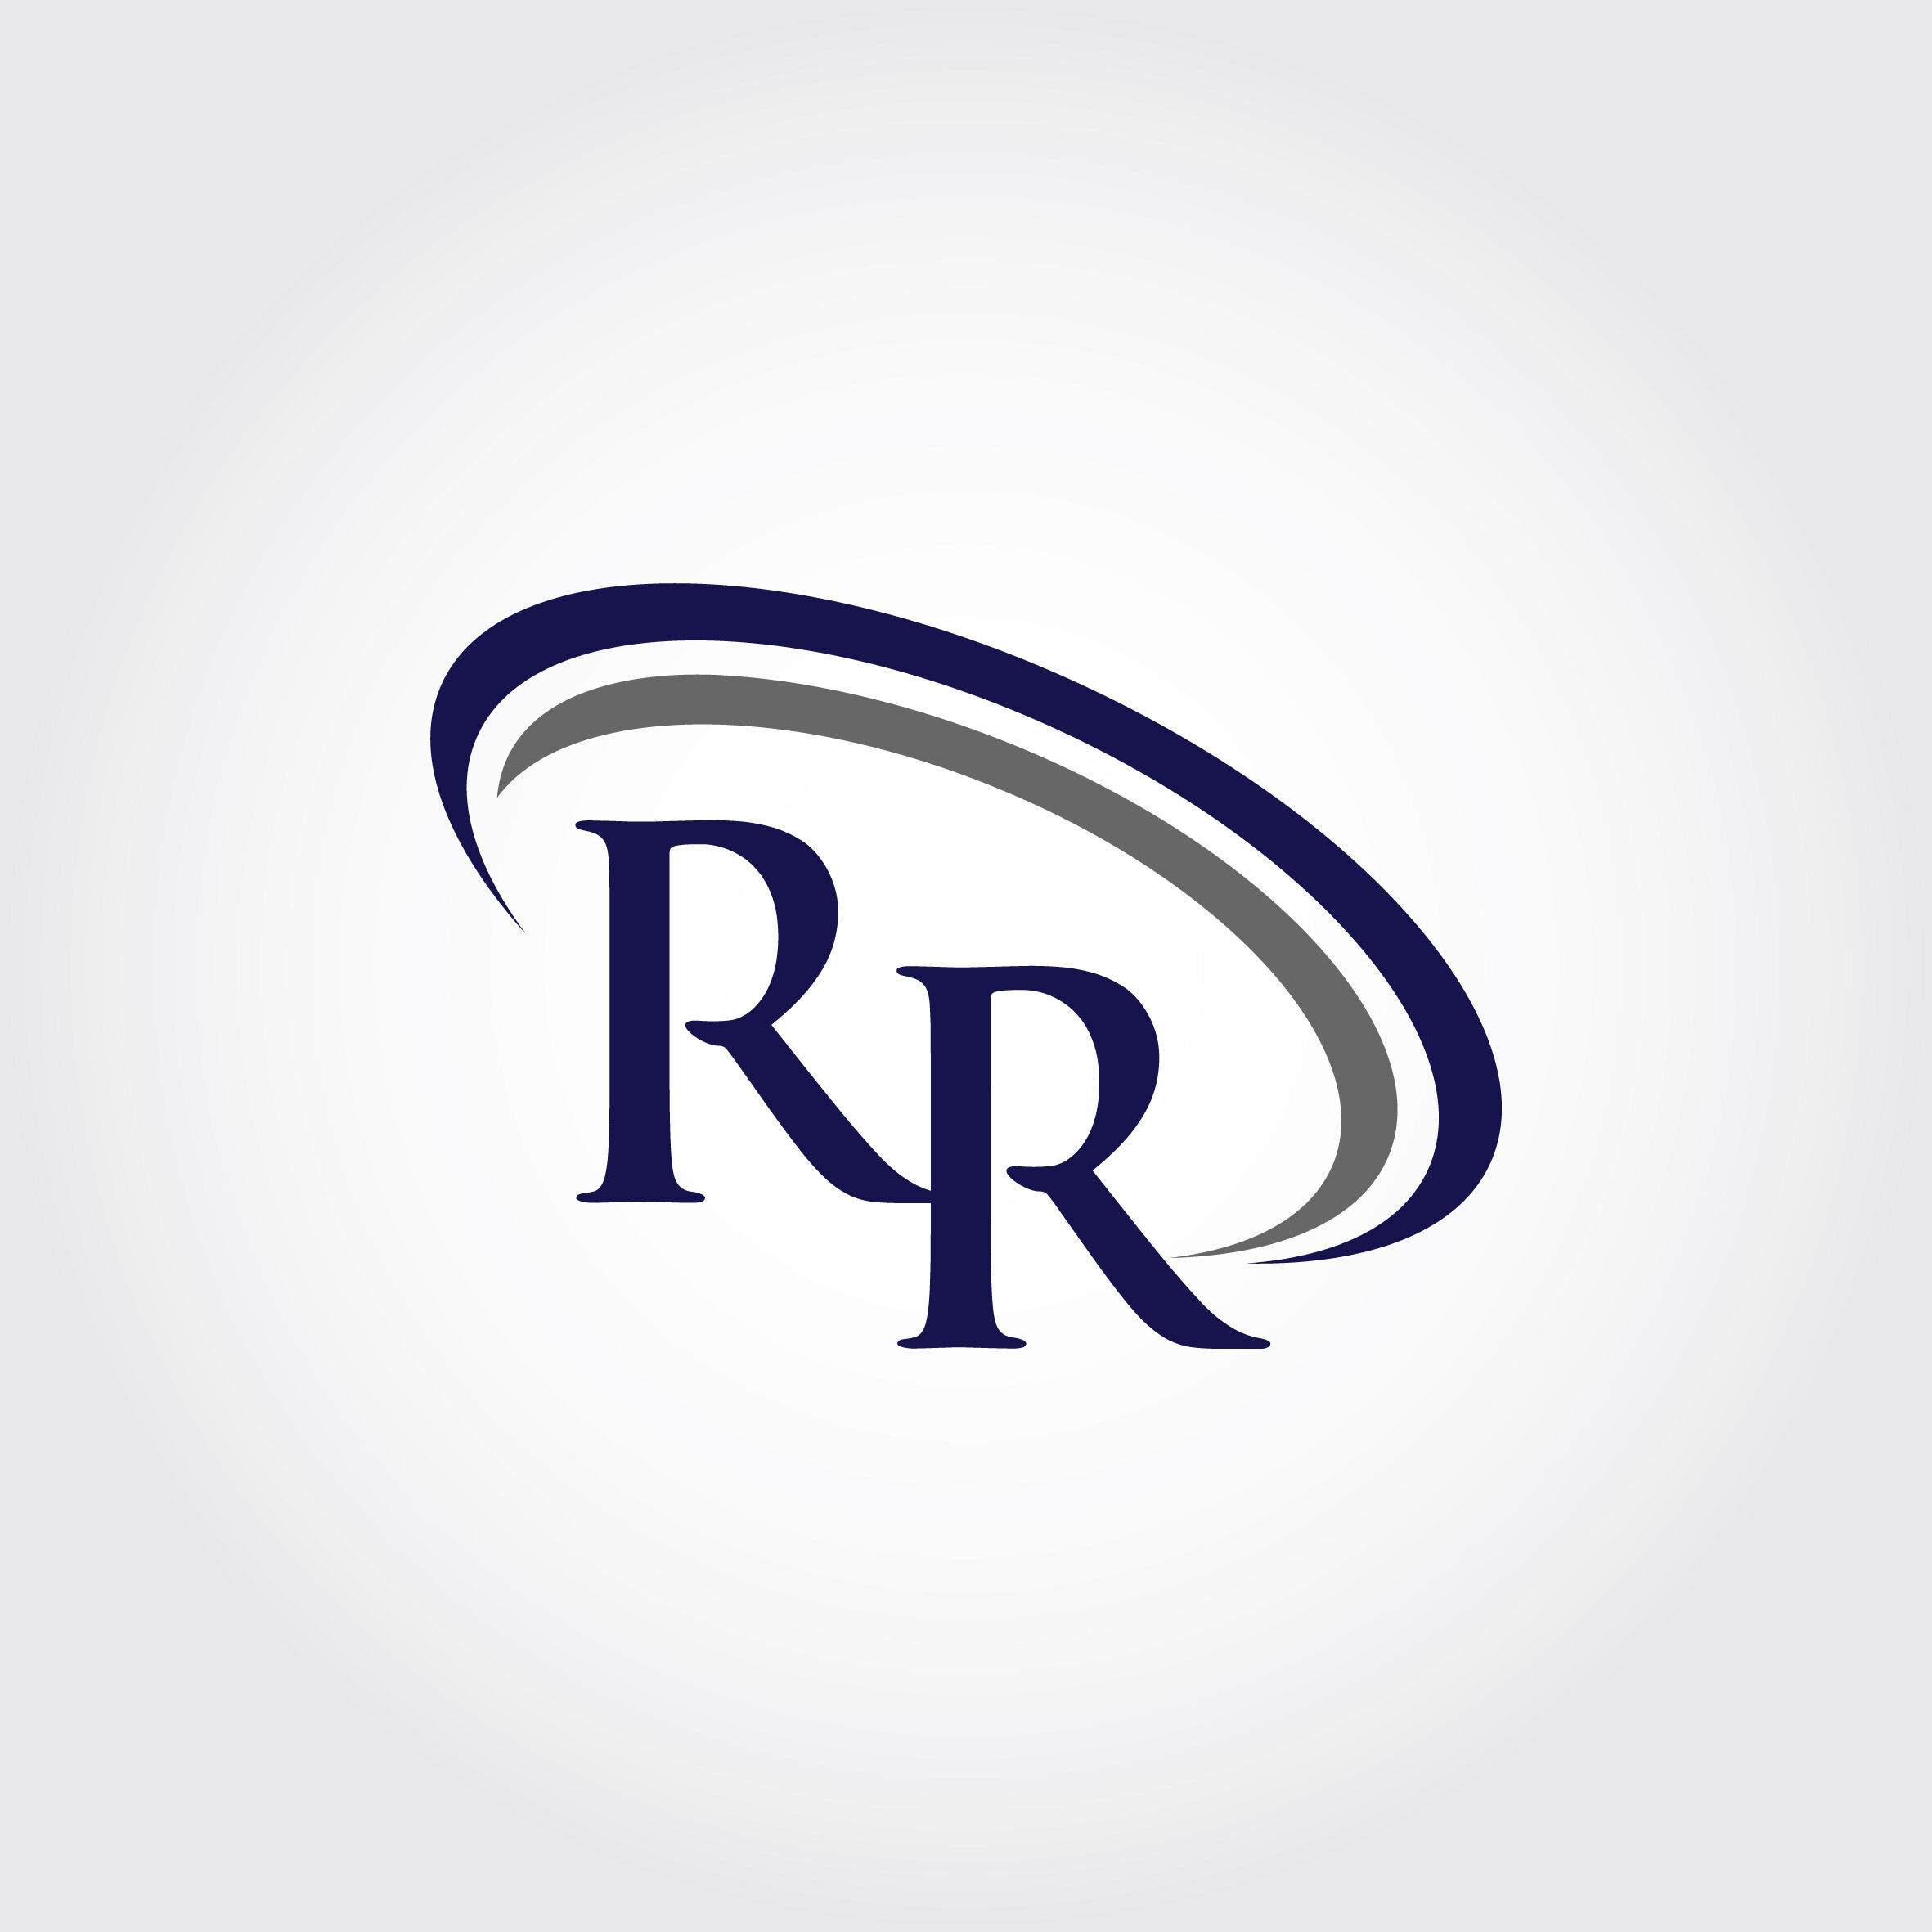 Monogram Rr Logo Design By Vectorseller Thehungryjpeg Com